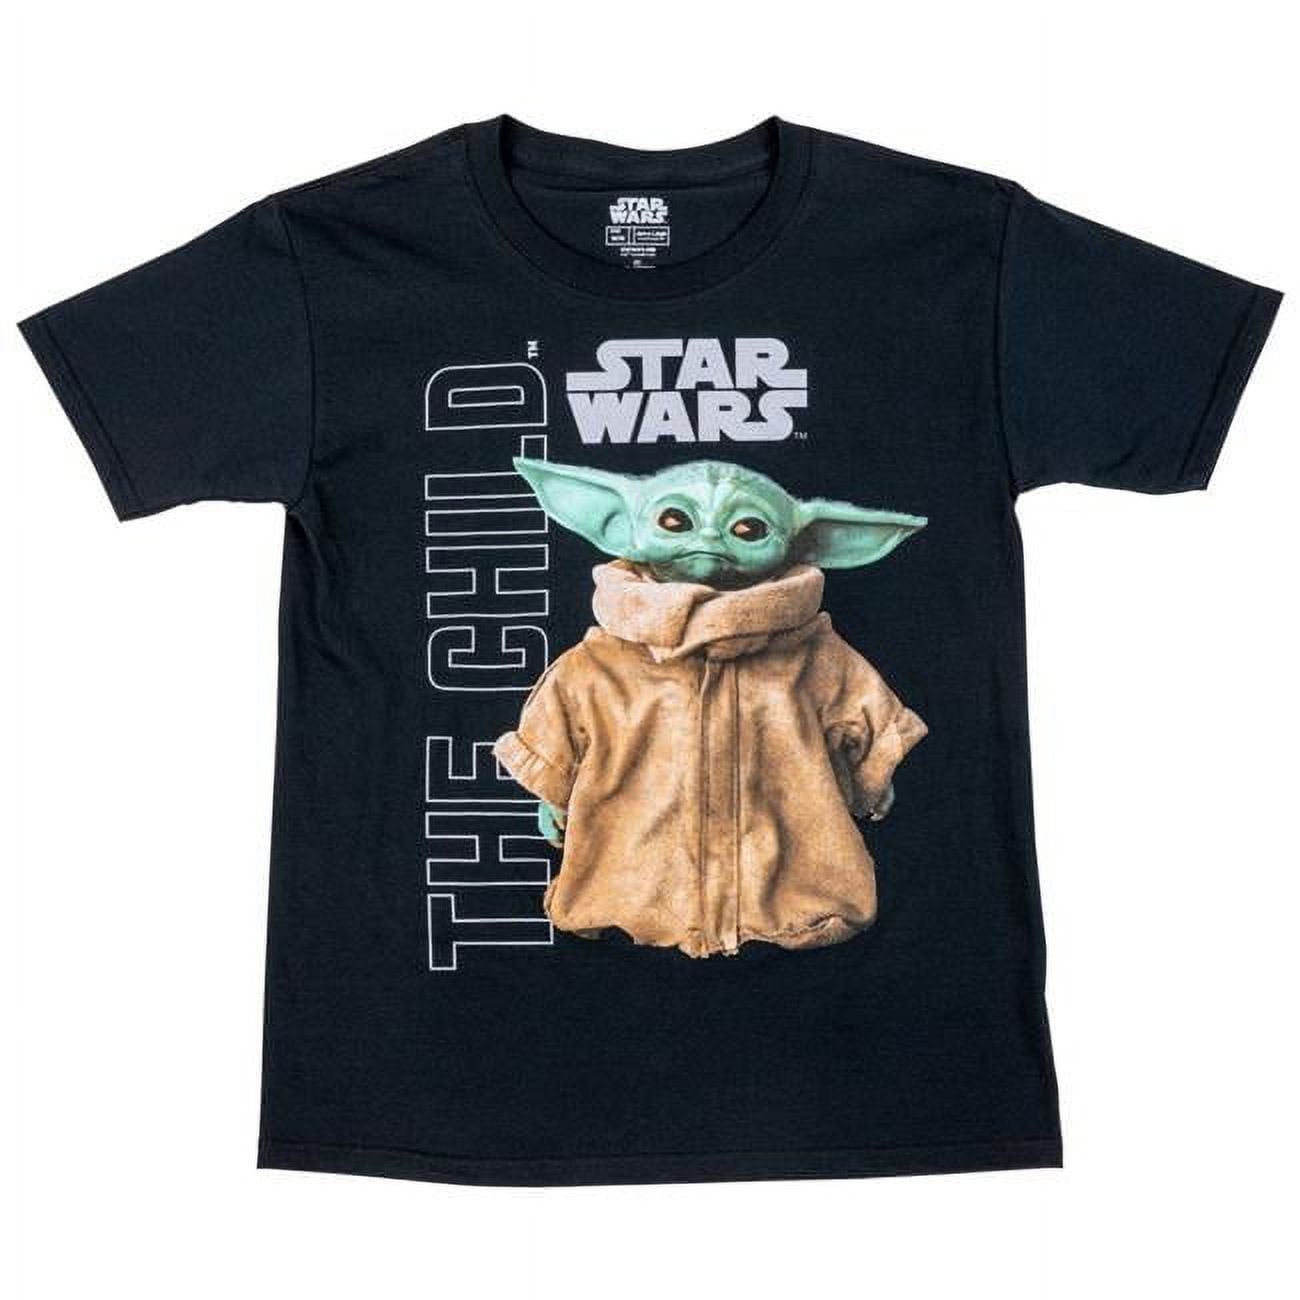 Star Wars The Mandalorian The Child Character Kids T-Shirt-Large (10-12)